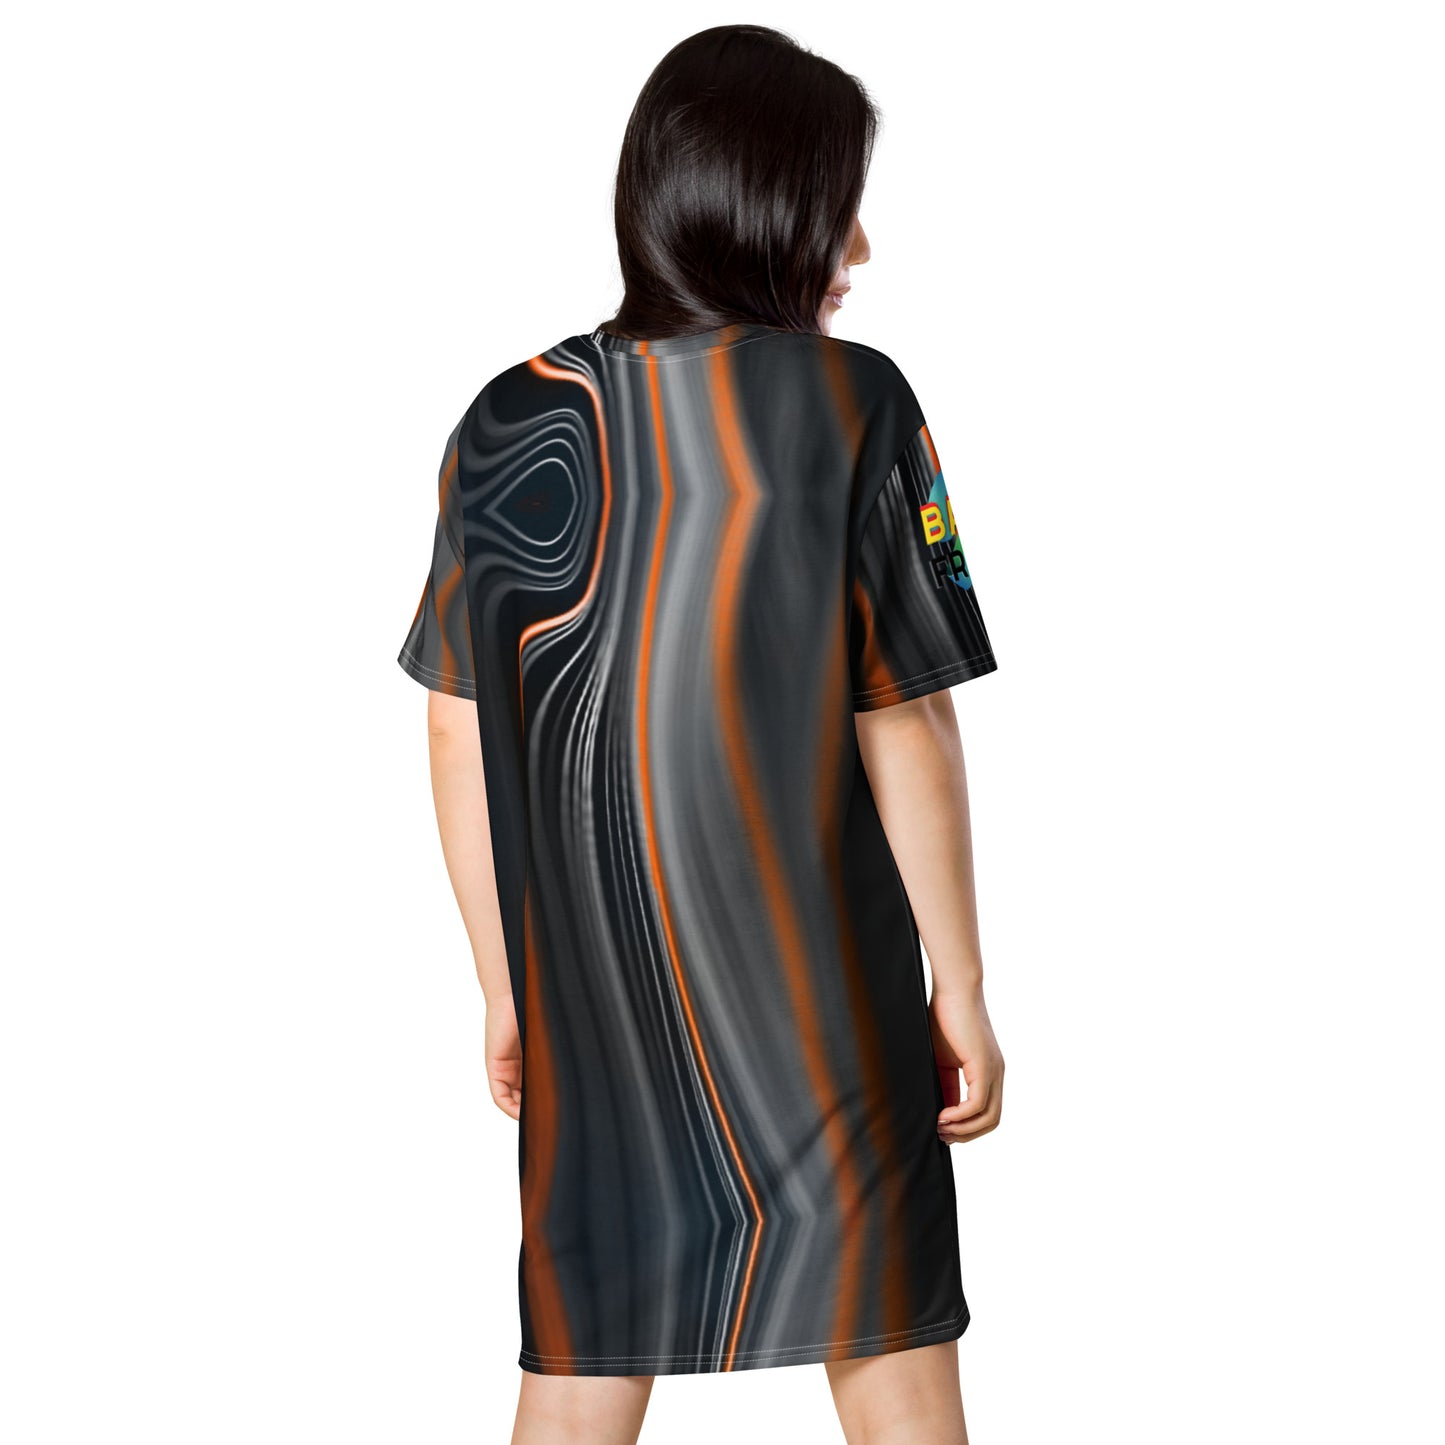 Future Tech Swim Dress by Baked Fresca